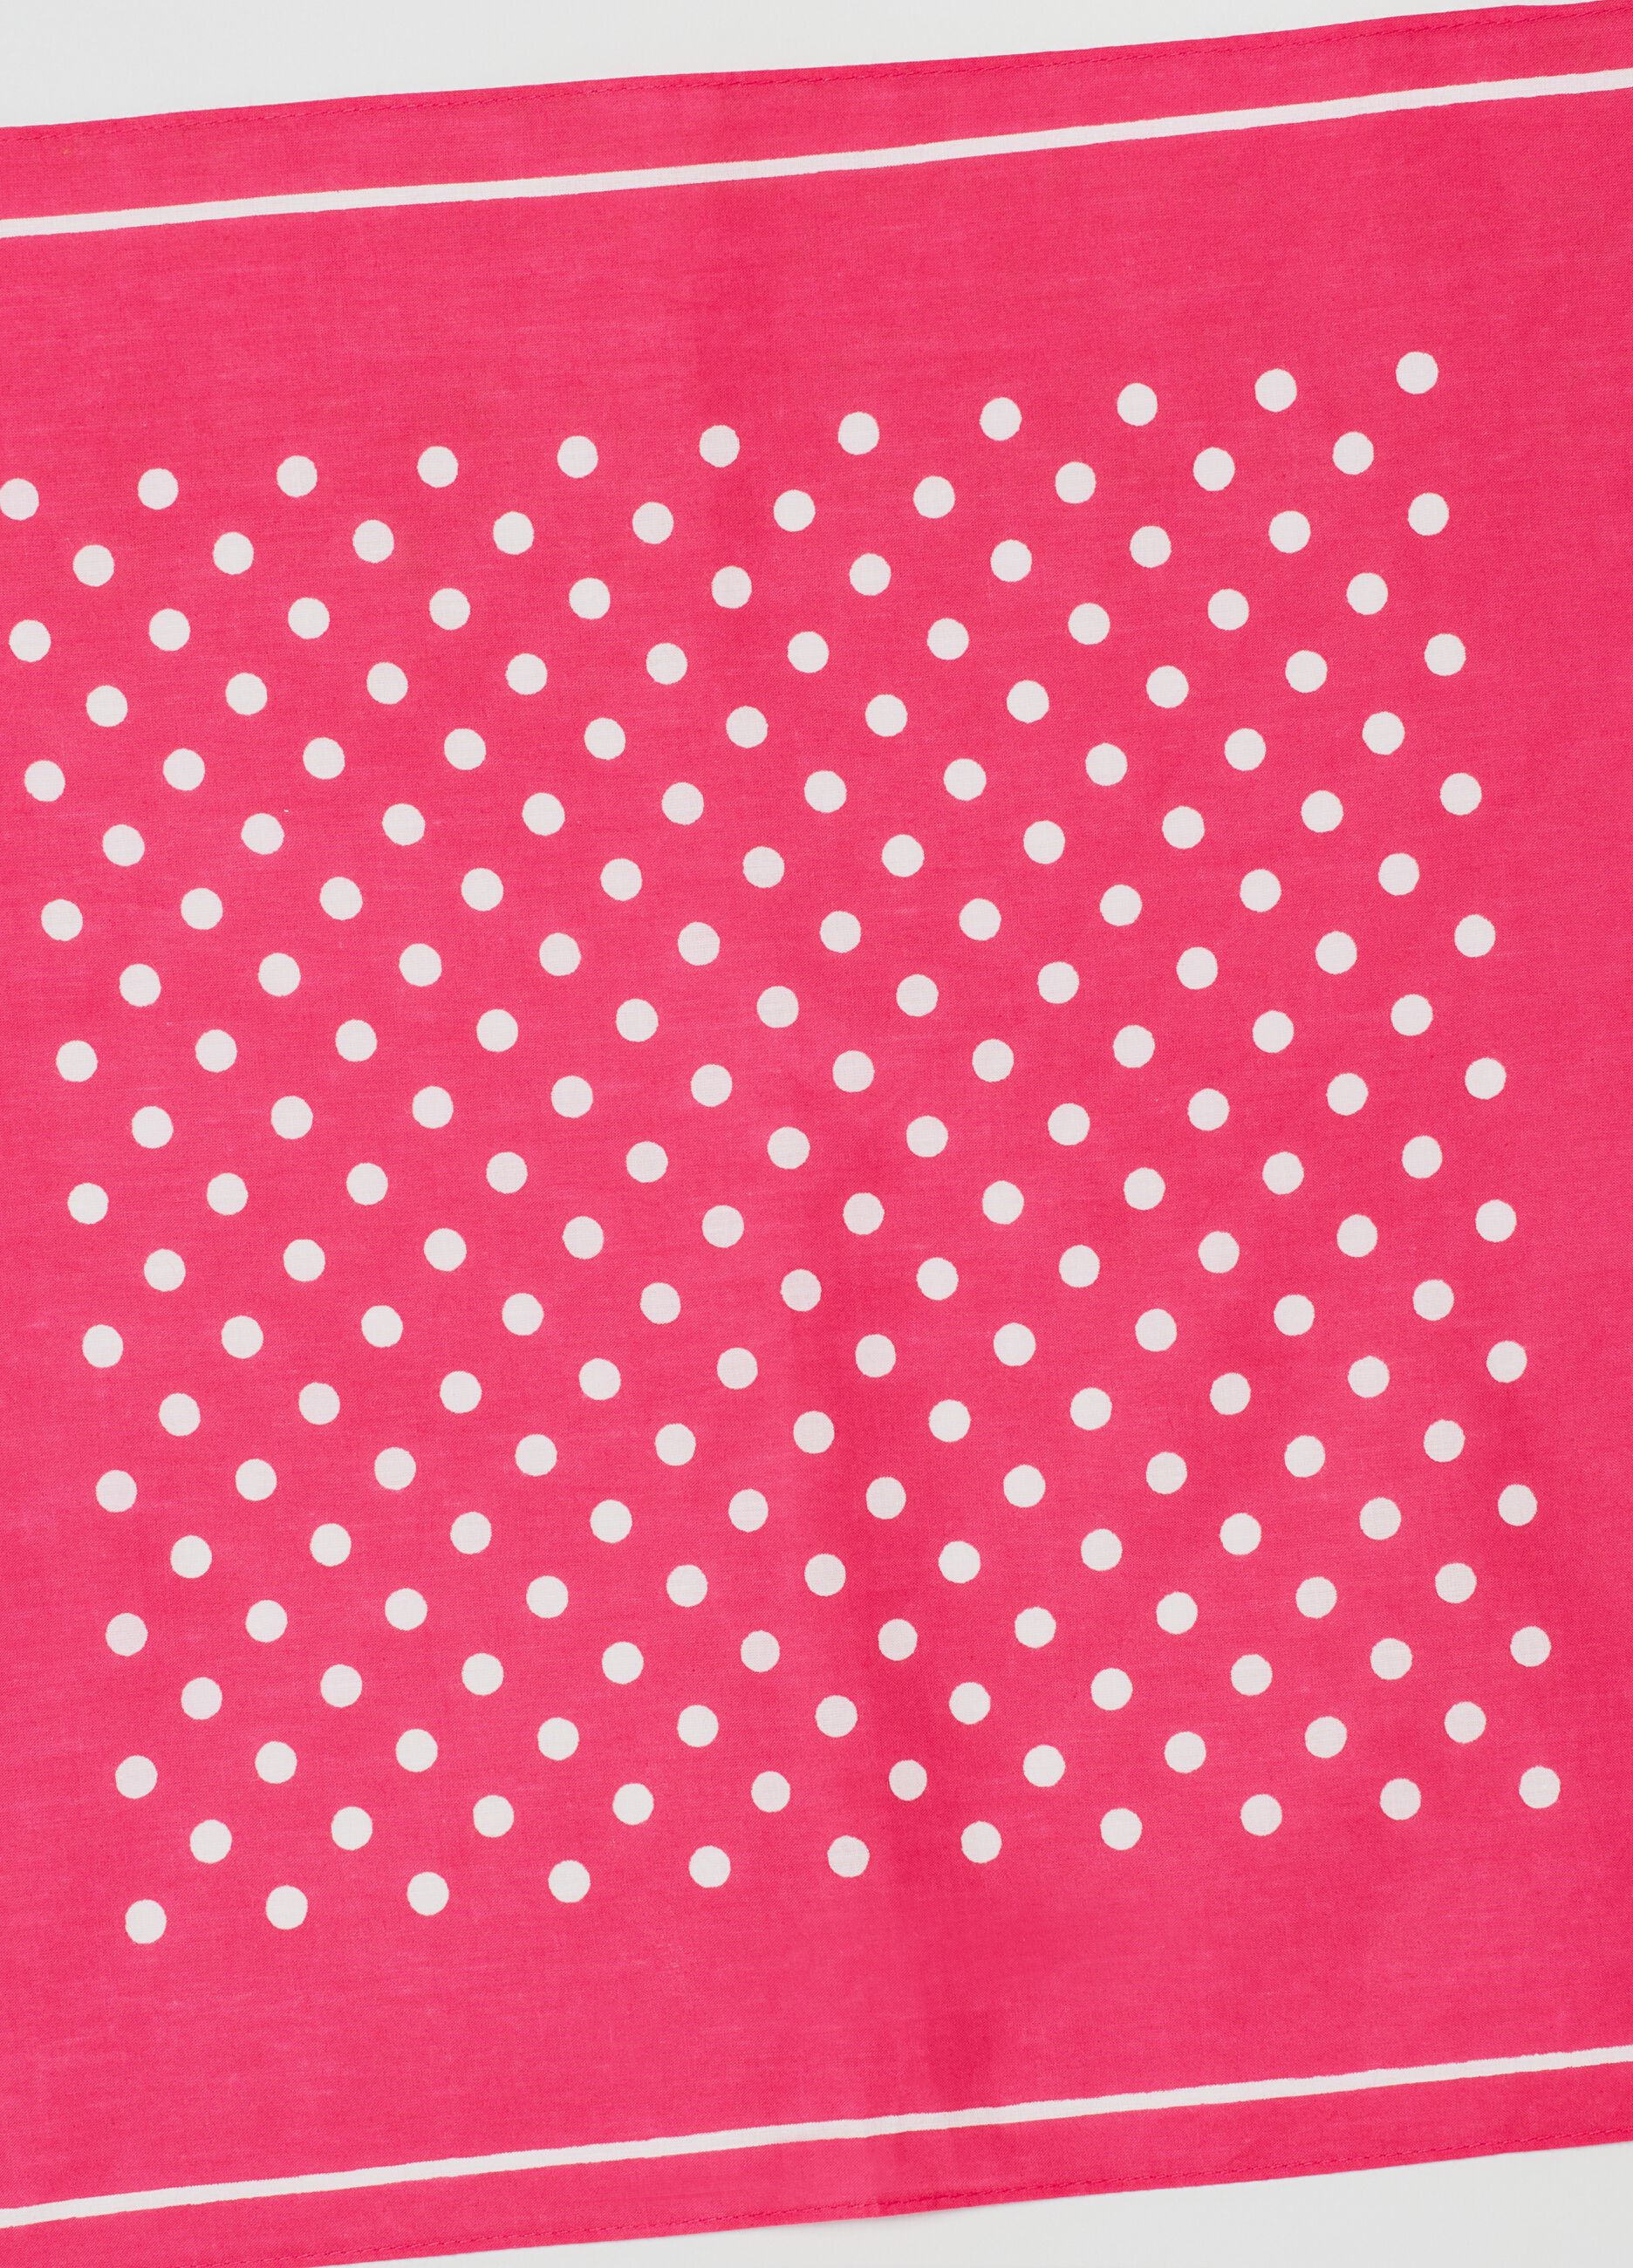 Bandana with polka dot pattern